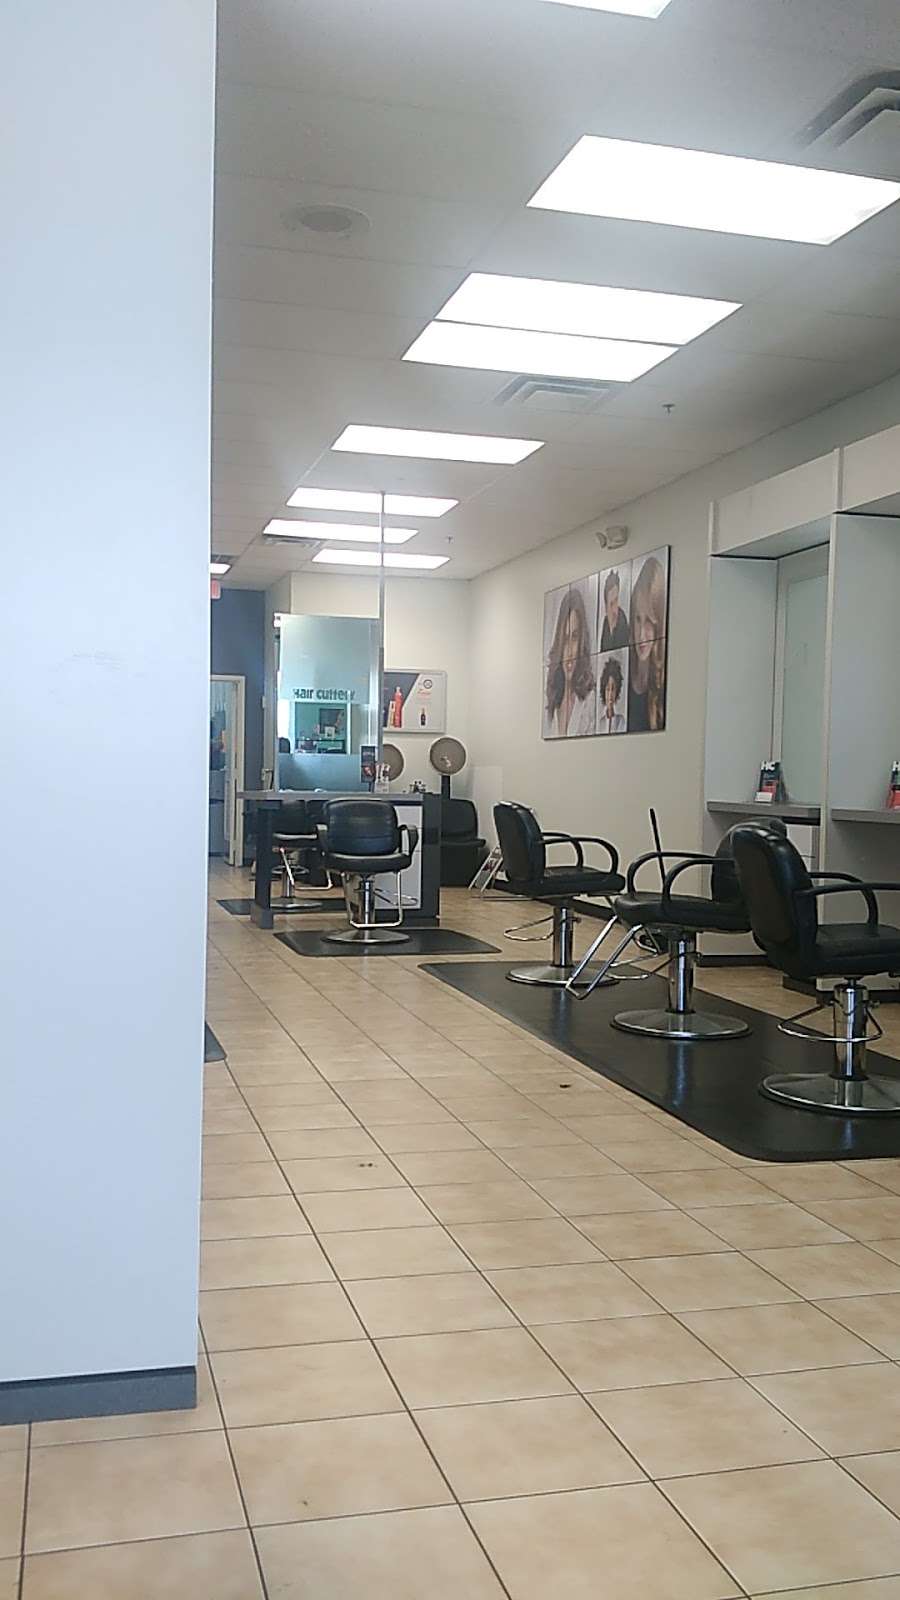 Hair Cuttery | 13880 Landstar Blvd, Orlando, FL 32824 | Phone: (407) 851-8162